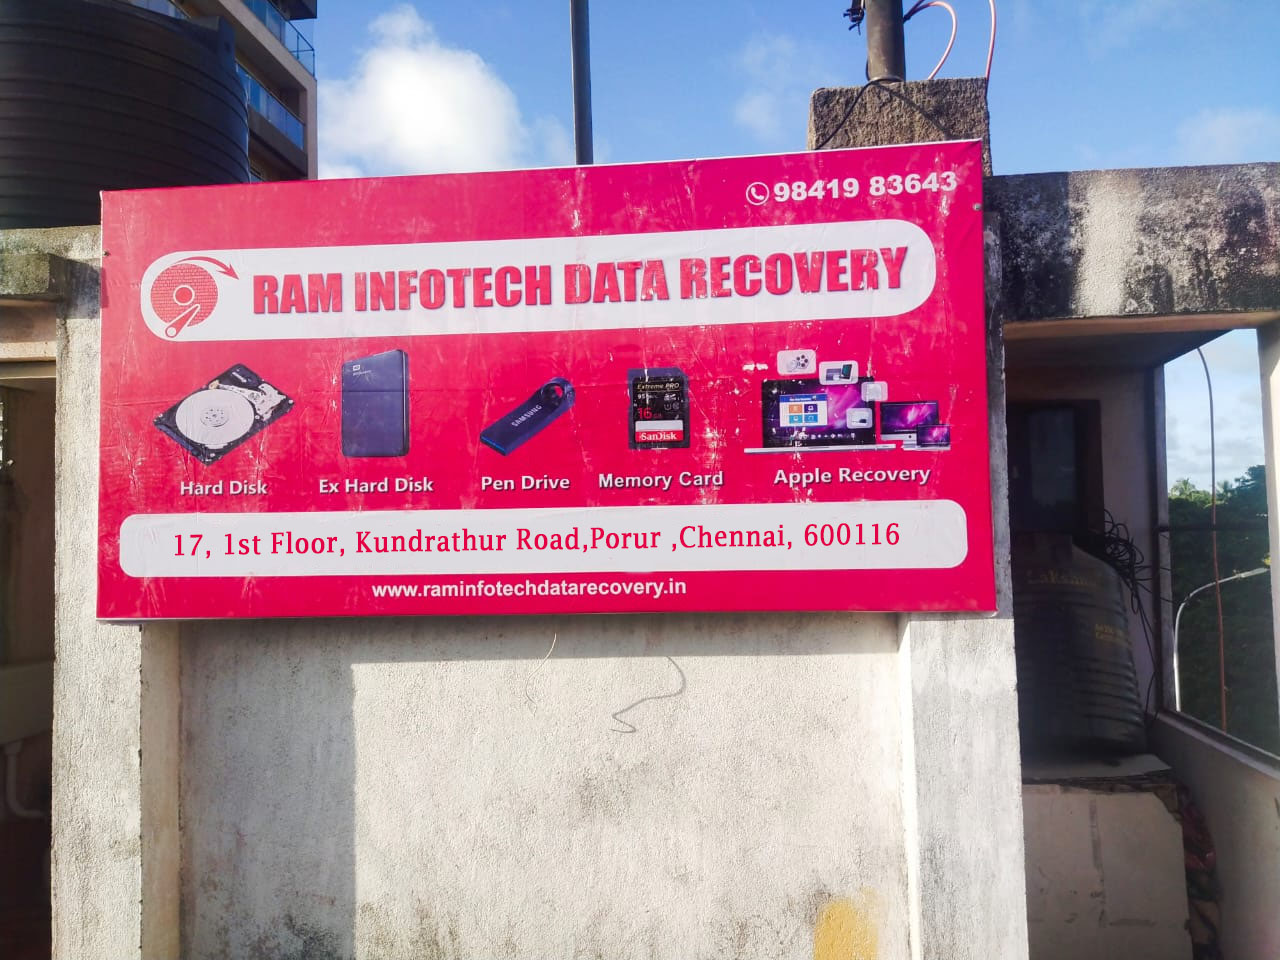 Raminfotech Data Recovery in porur in Chennai